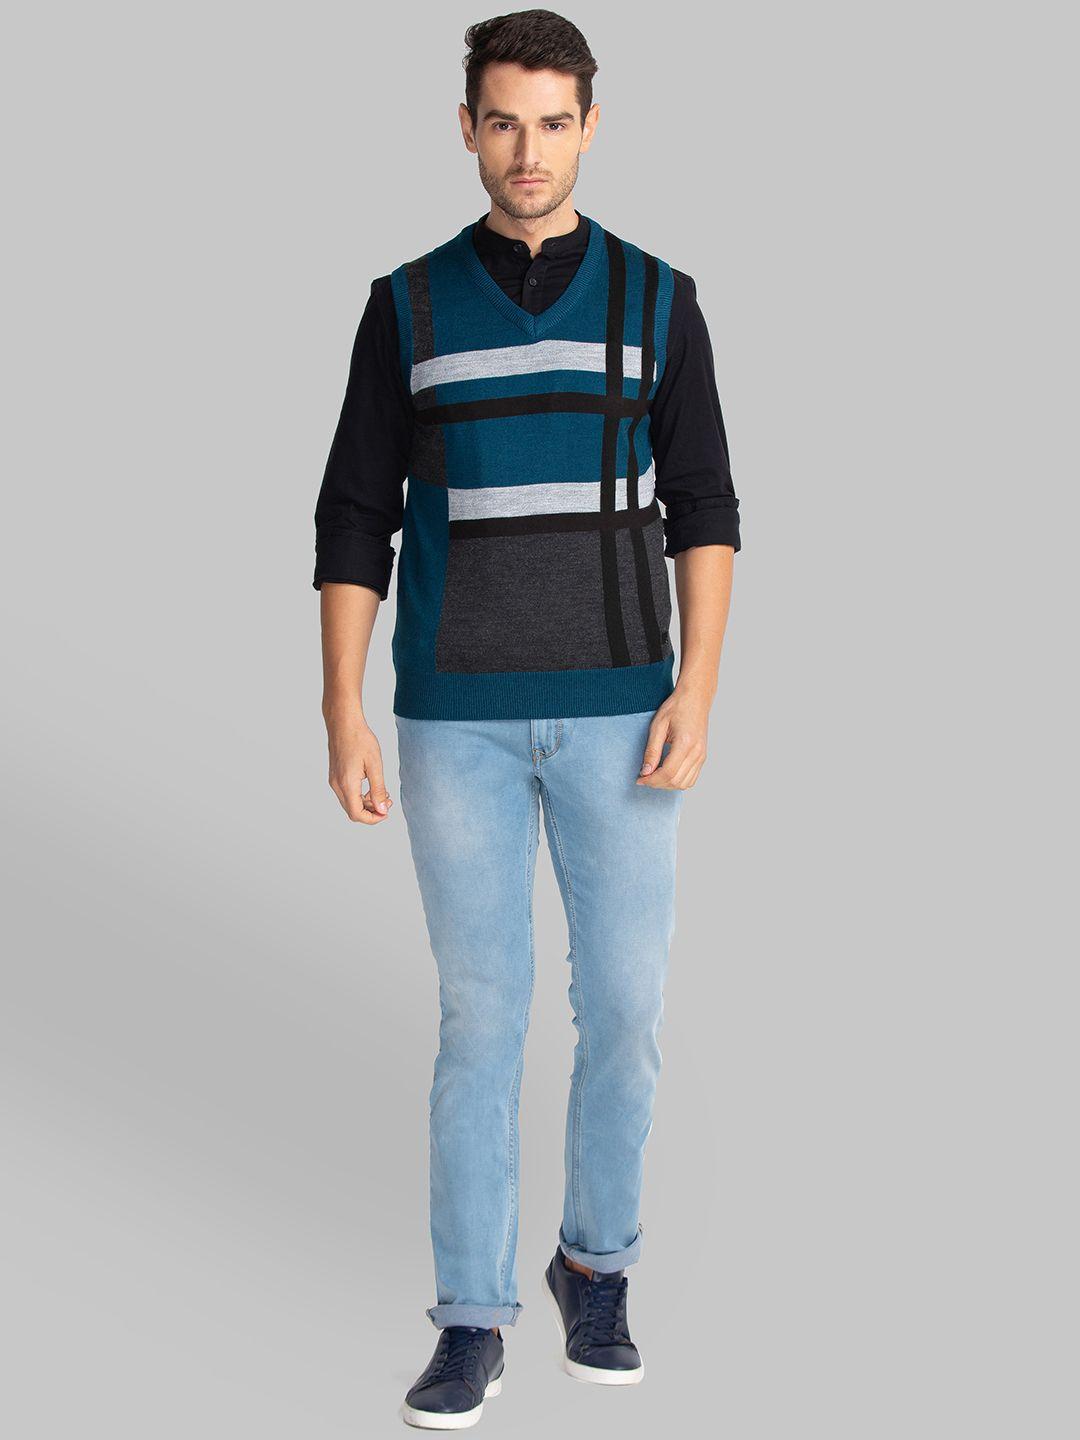 parx-men-teal-&-white-striped-sweater-vest